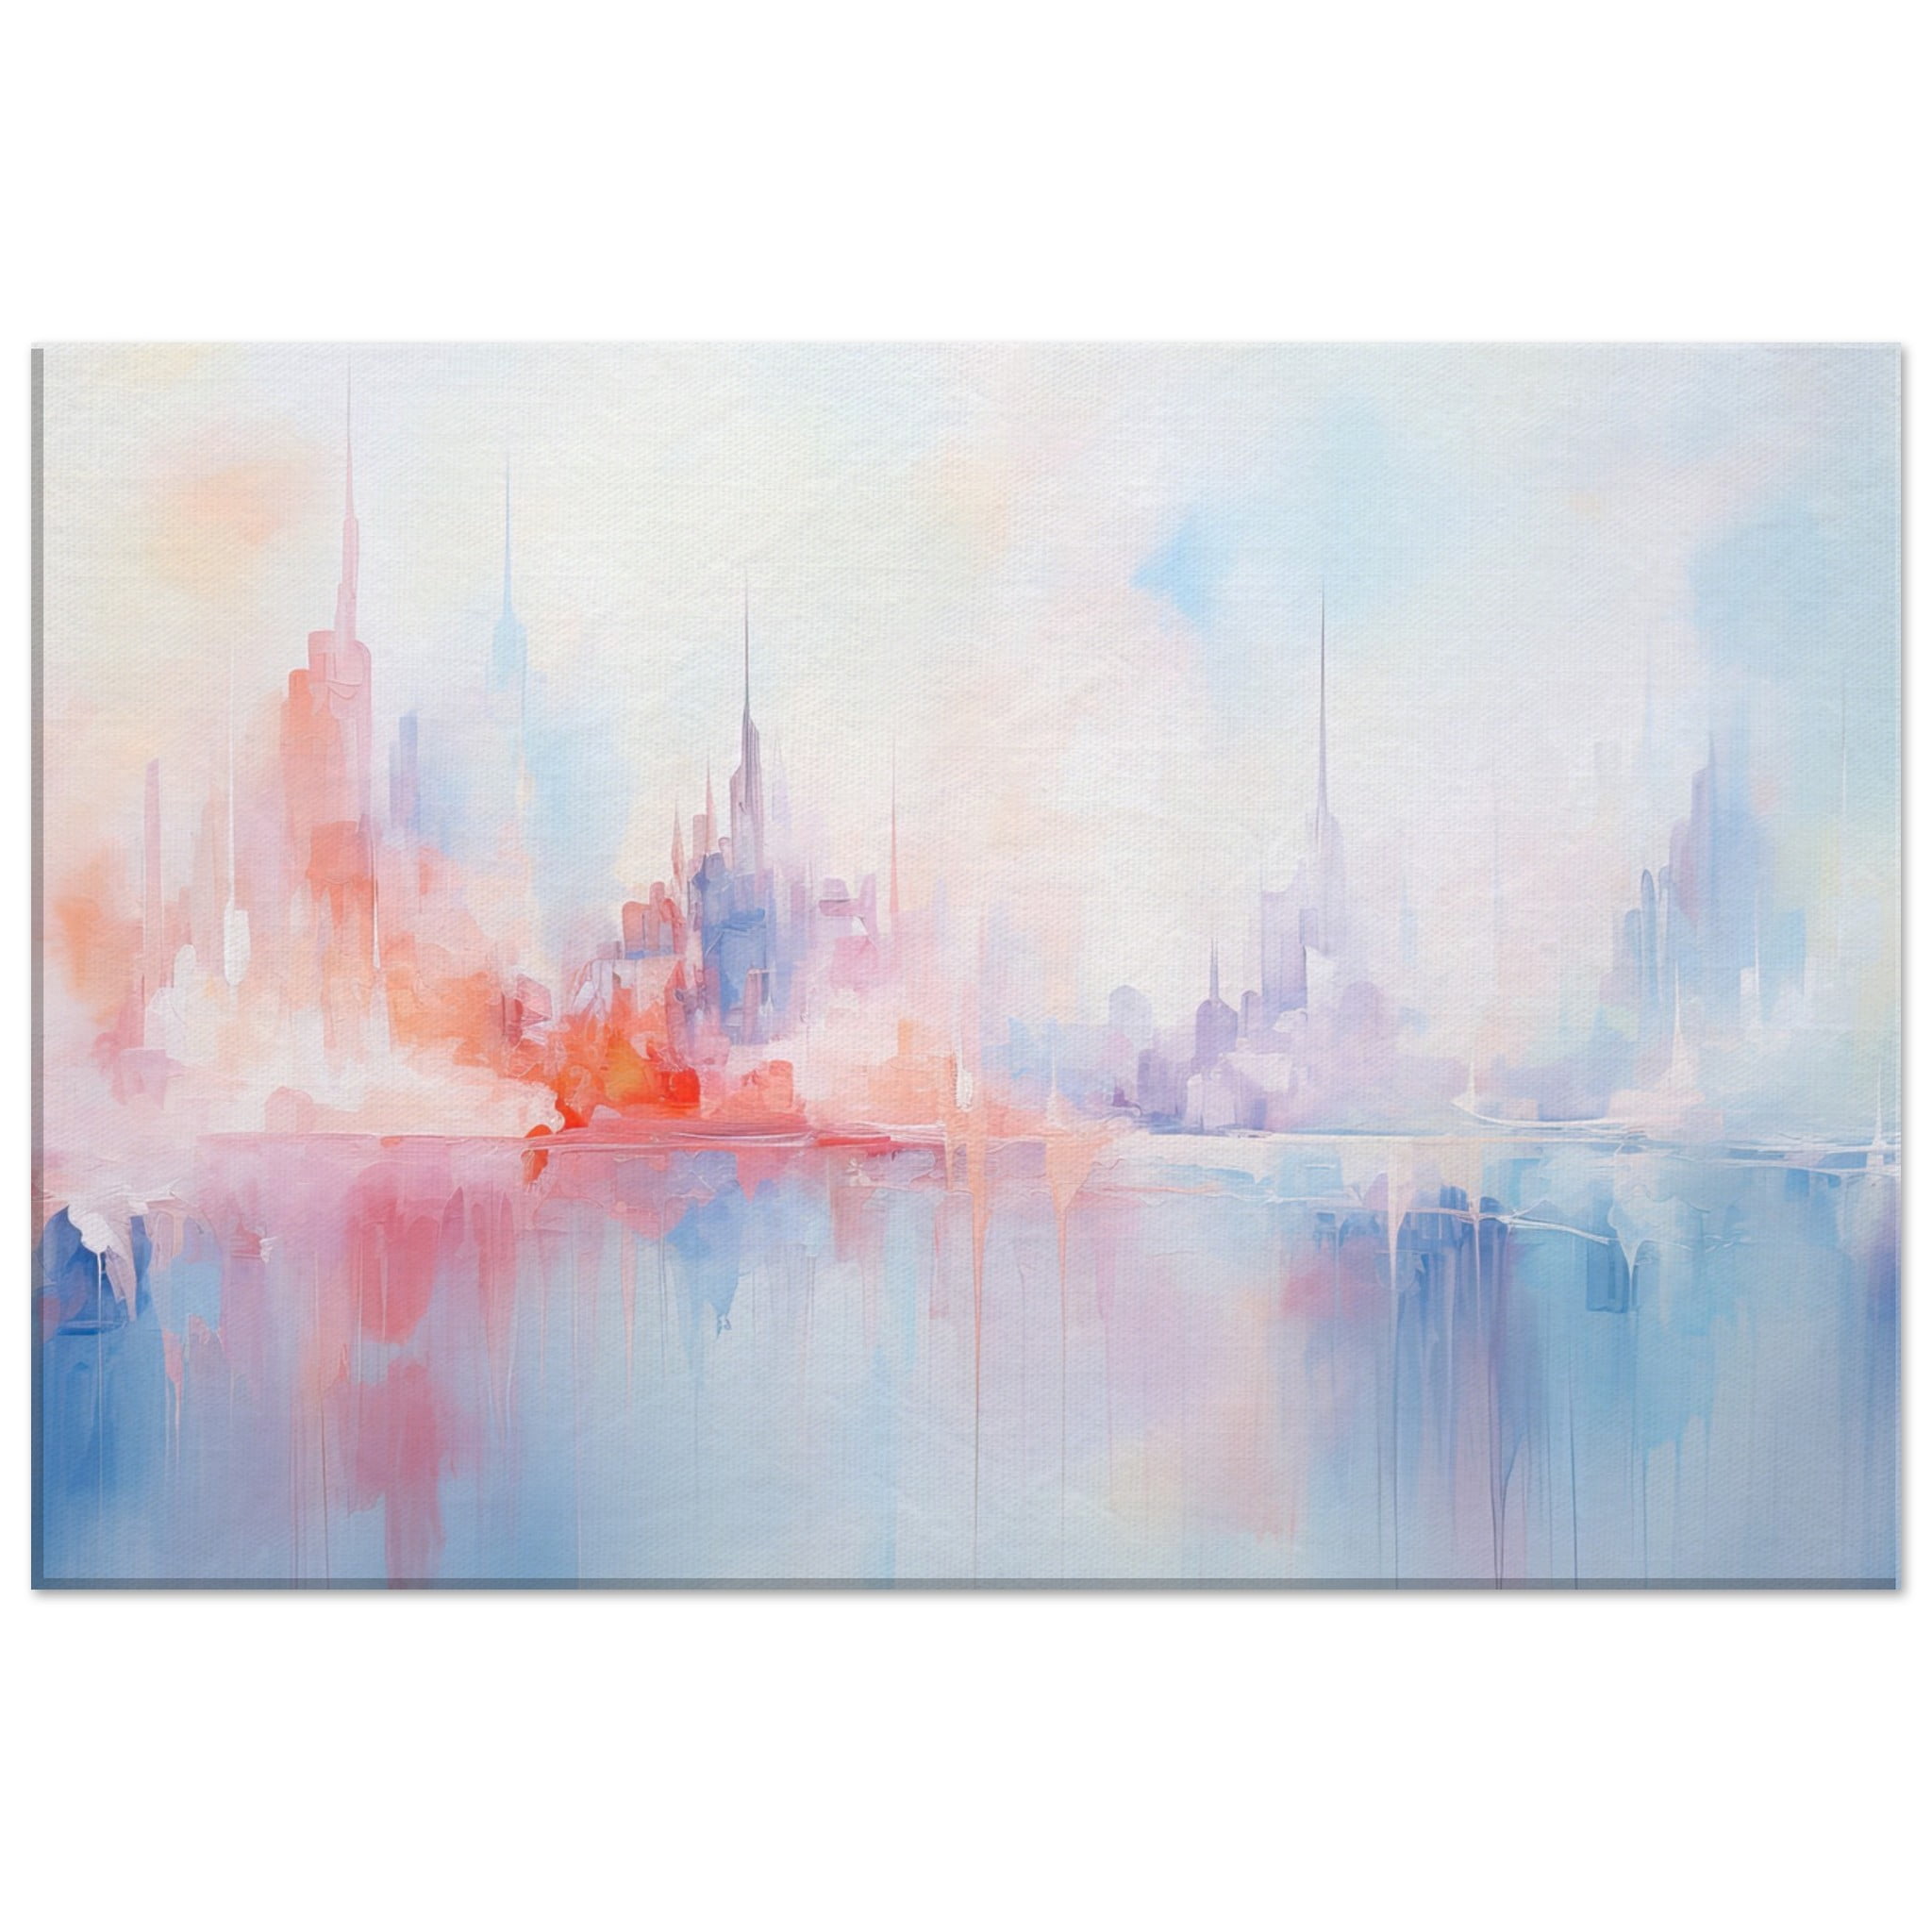 Pastel Abstract City Skyline Canvas Print